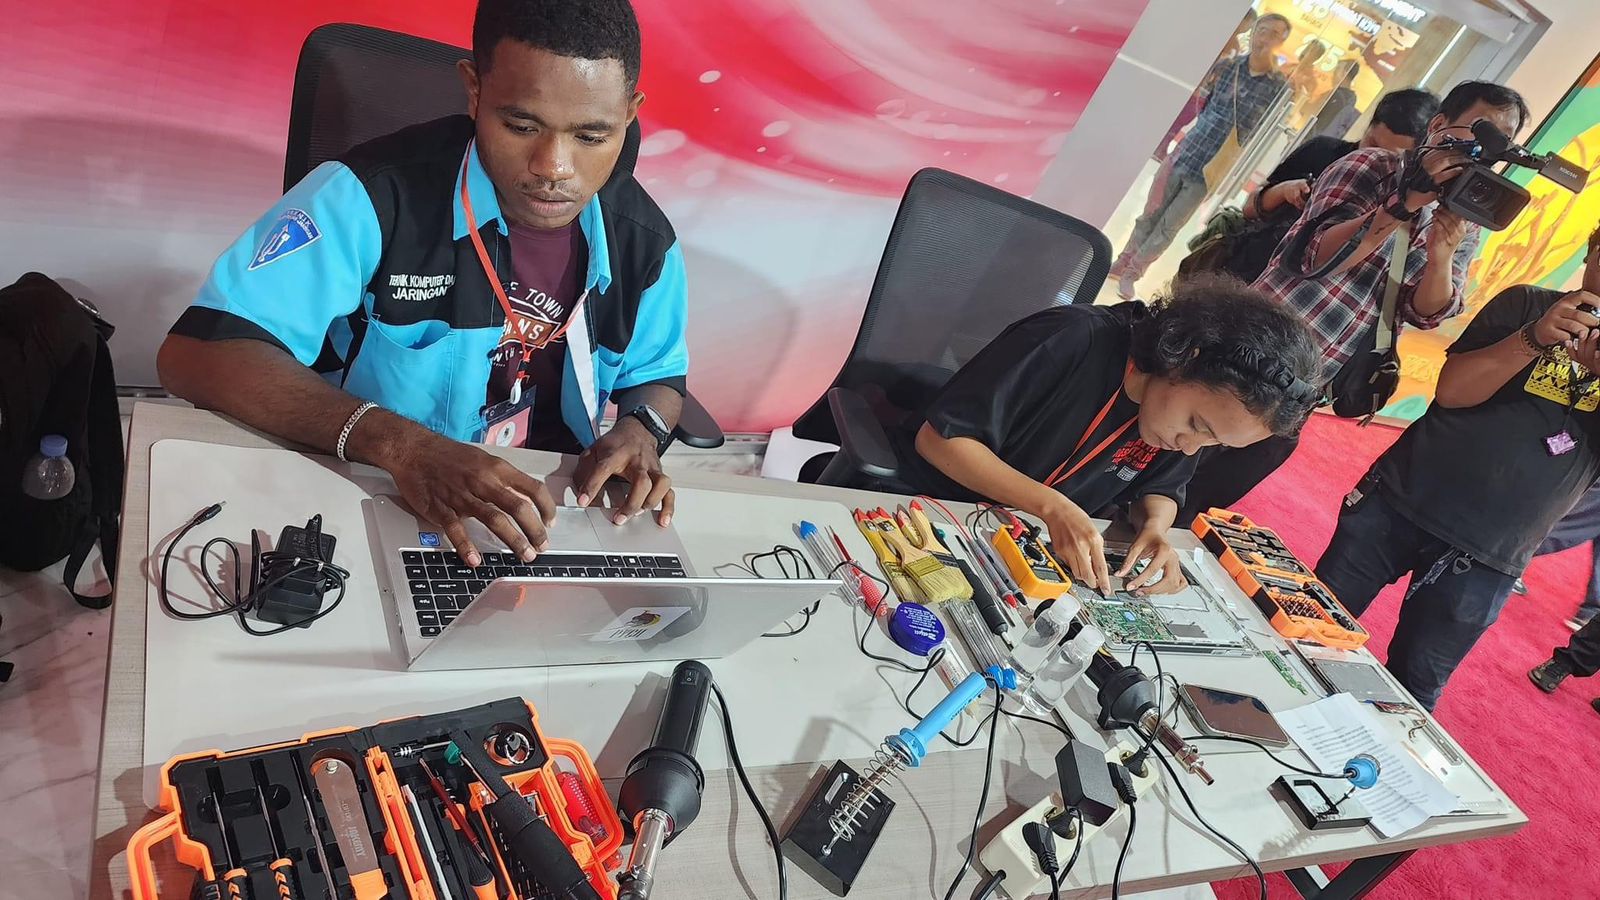 Pelajar Papua Binaan Litbang BIN Kembangkan Gadget dan Laptop Sendiri